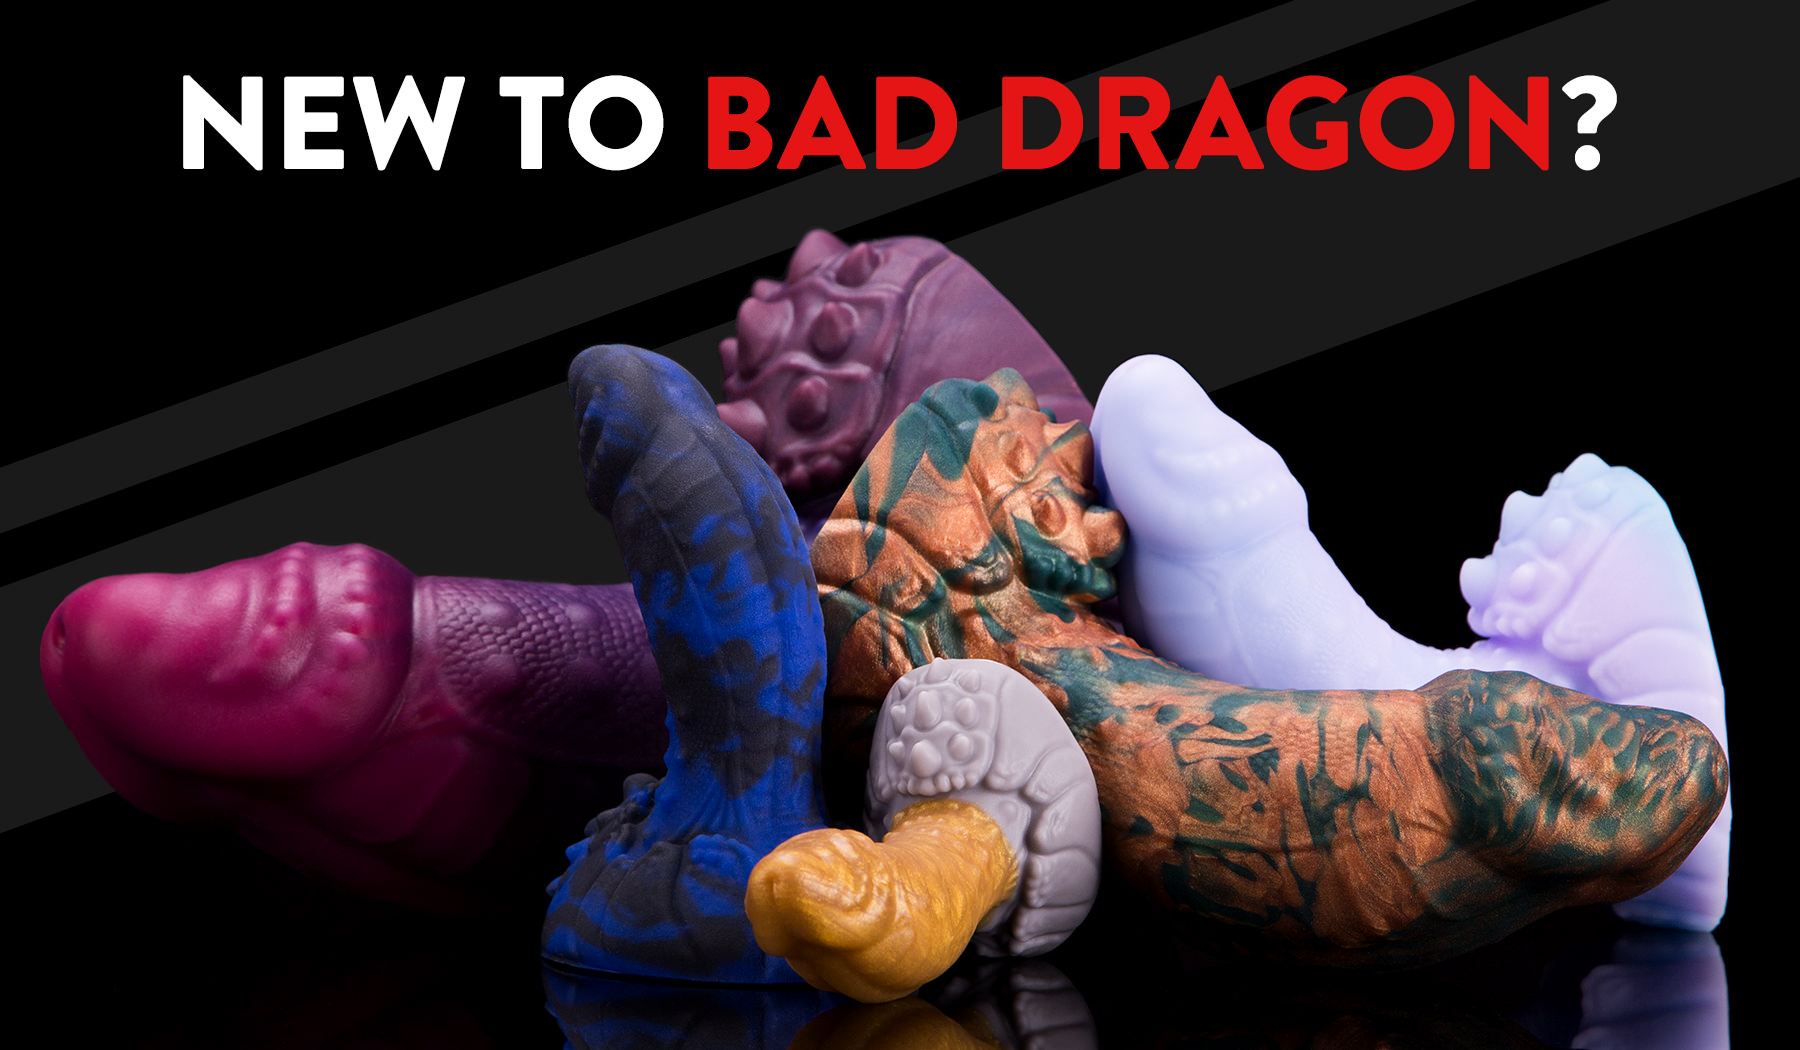 dildos Bad dragon